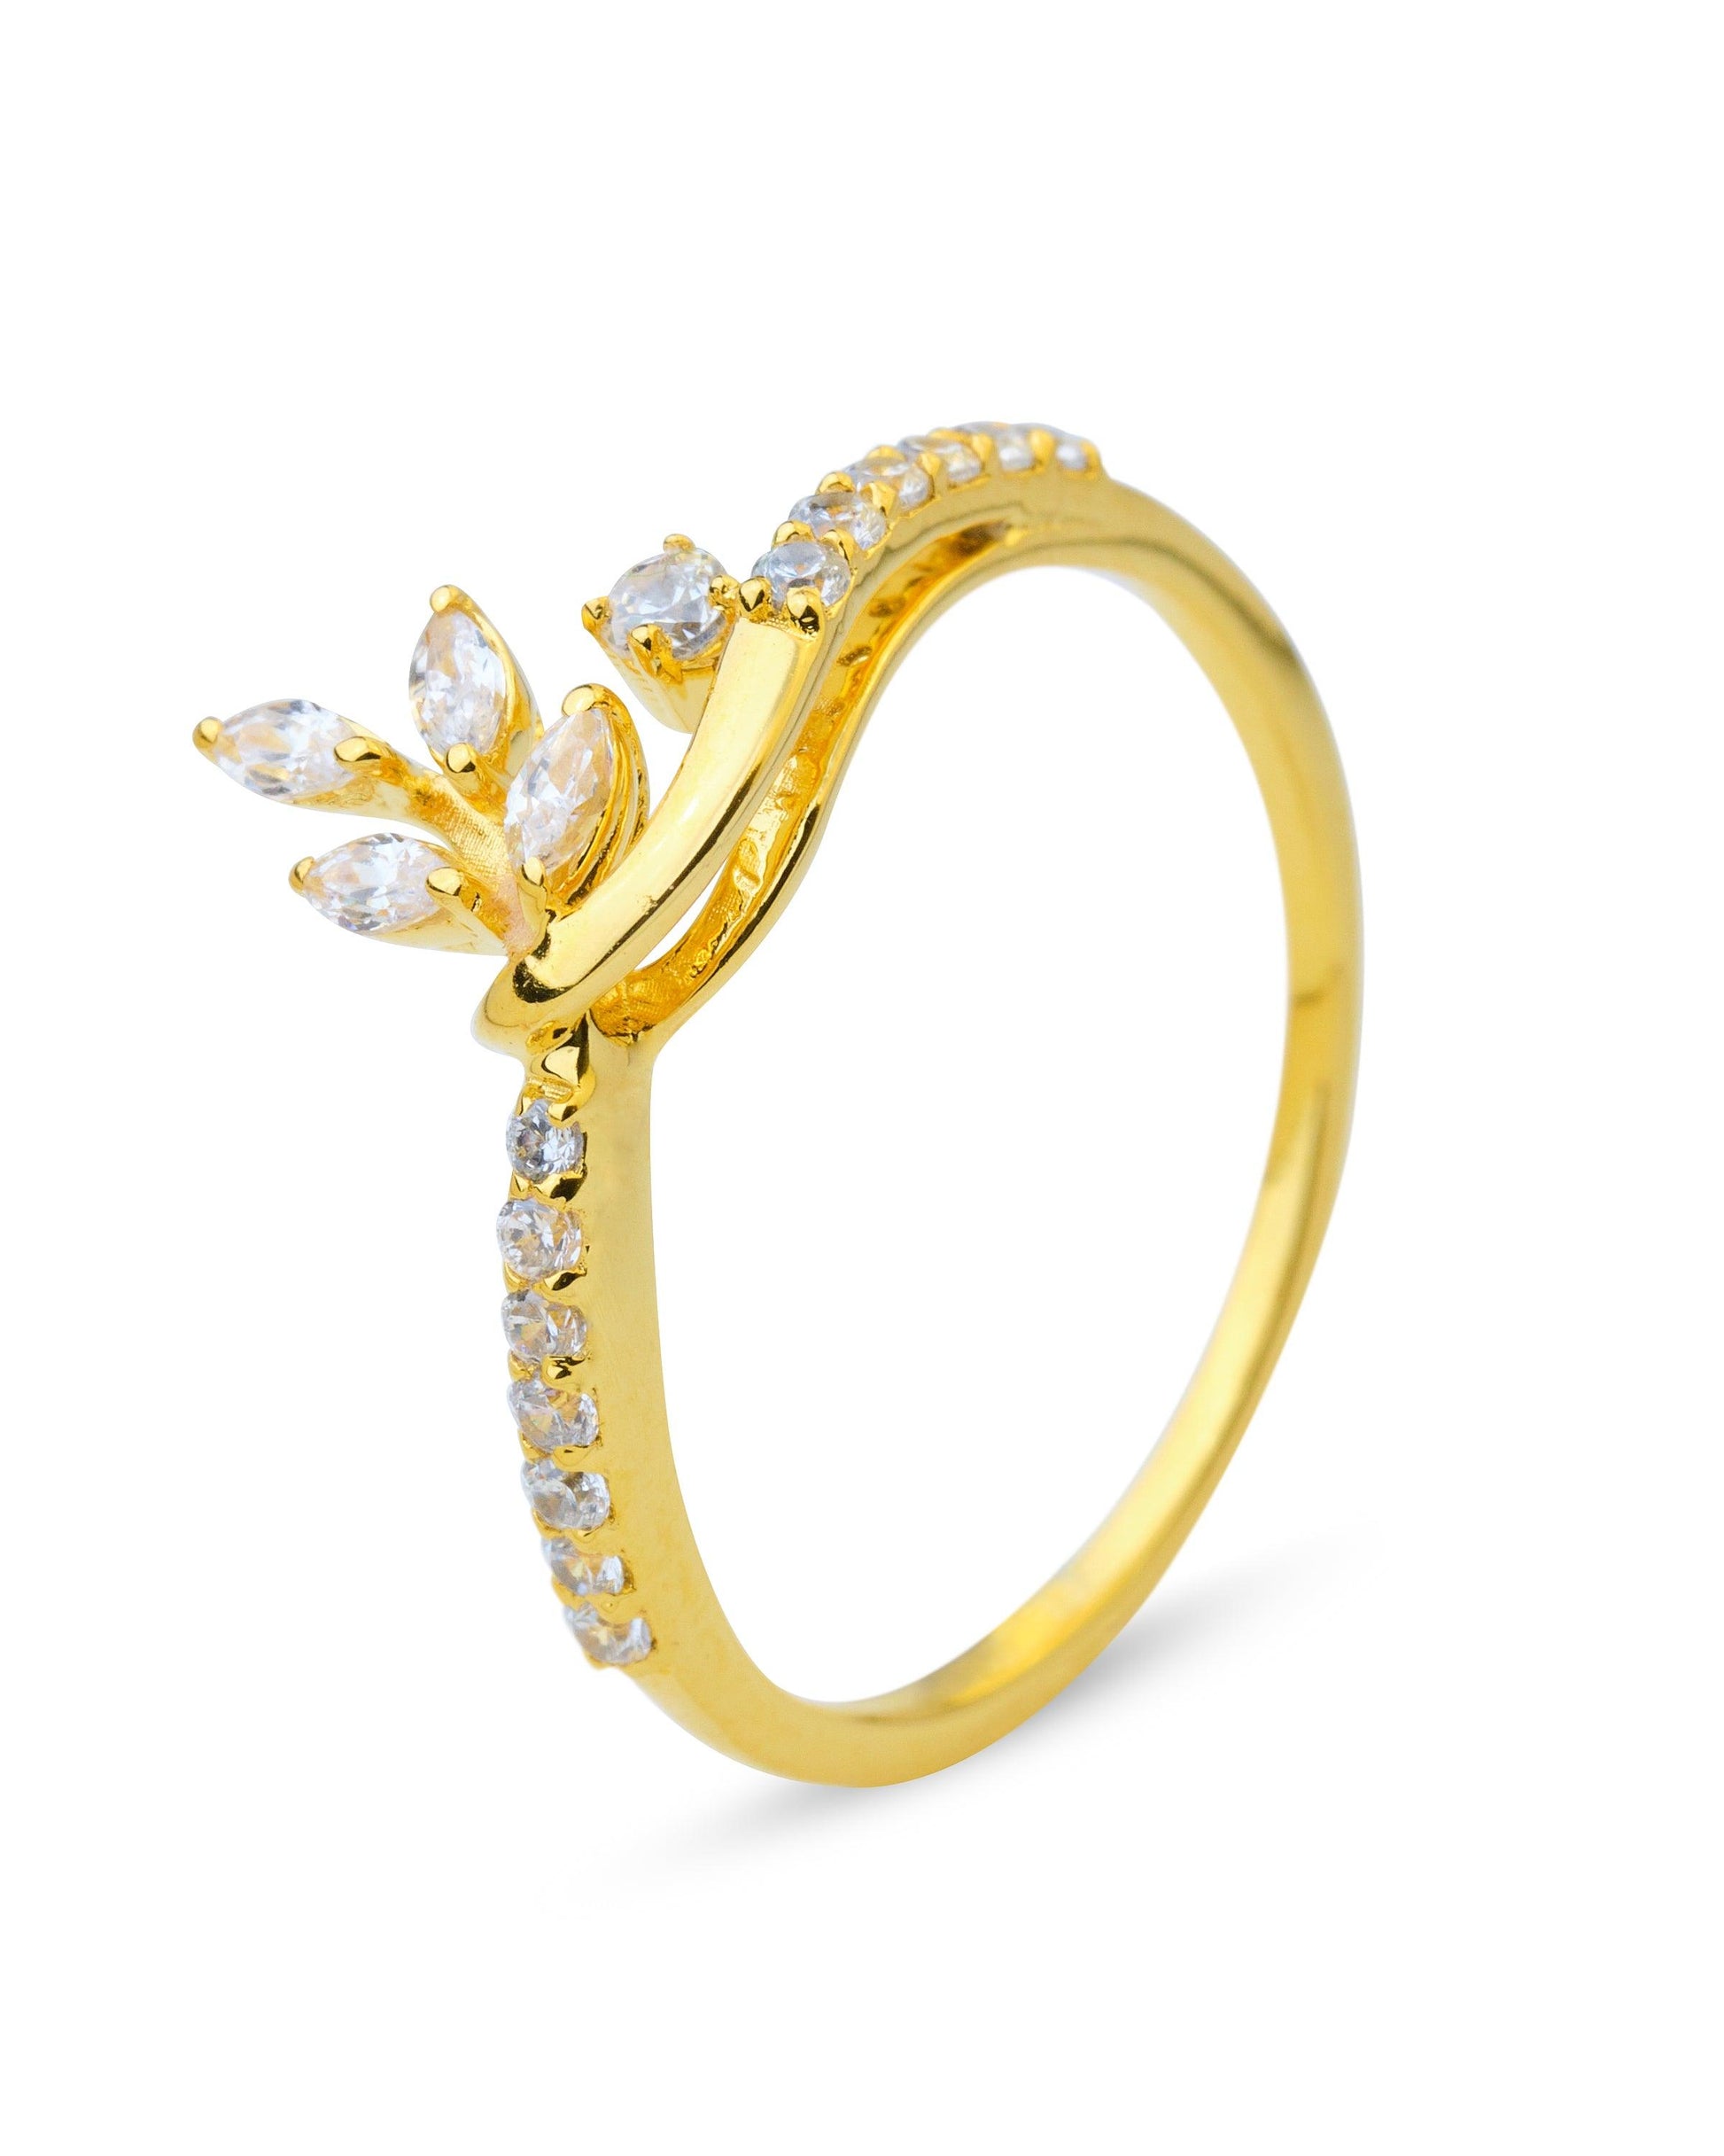 Radiance Floral Diamond Ring - Chandrani Pearls